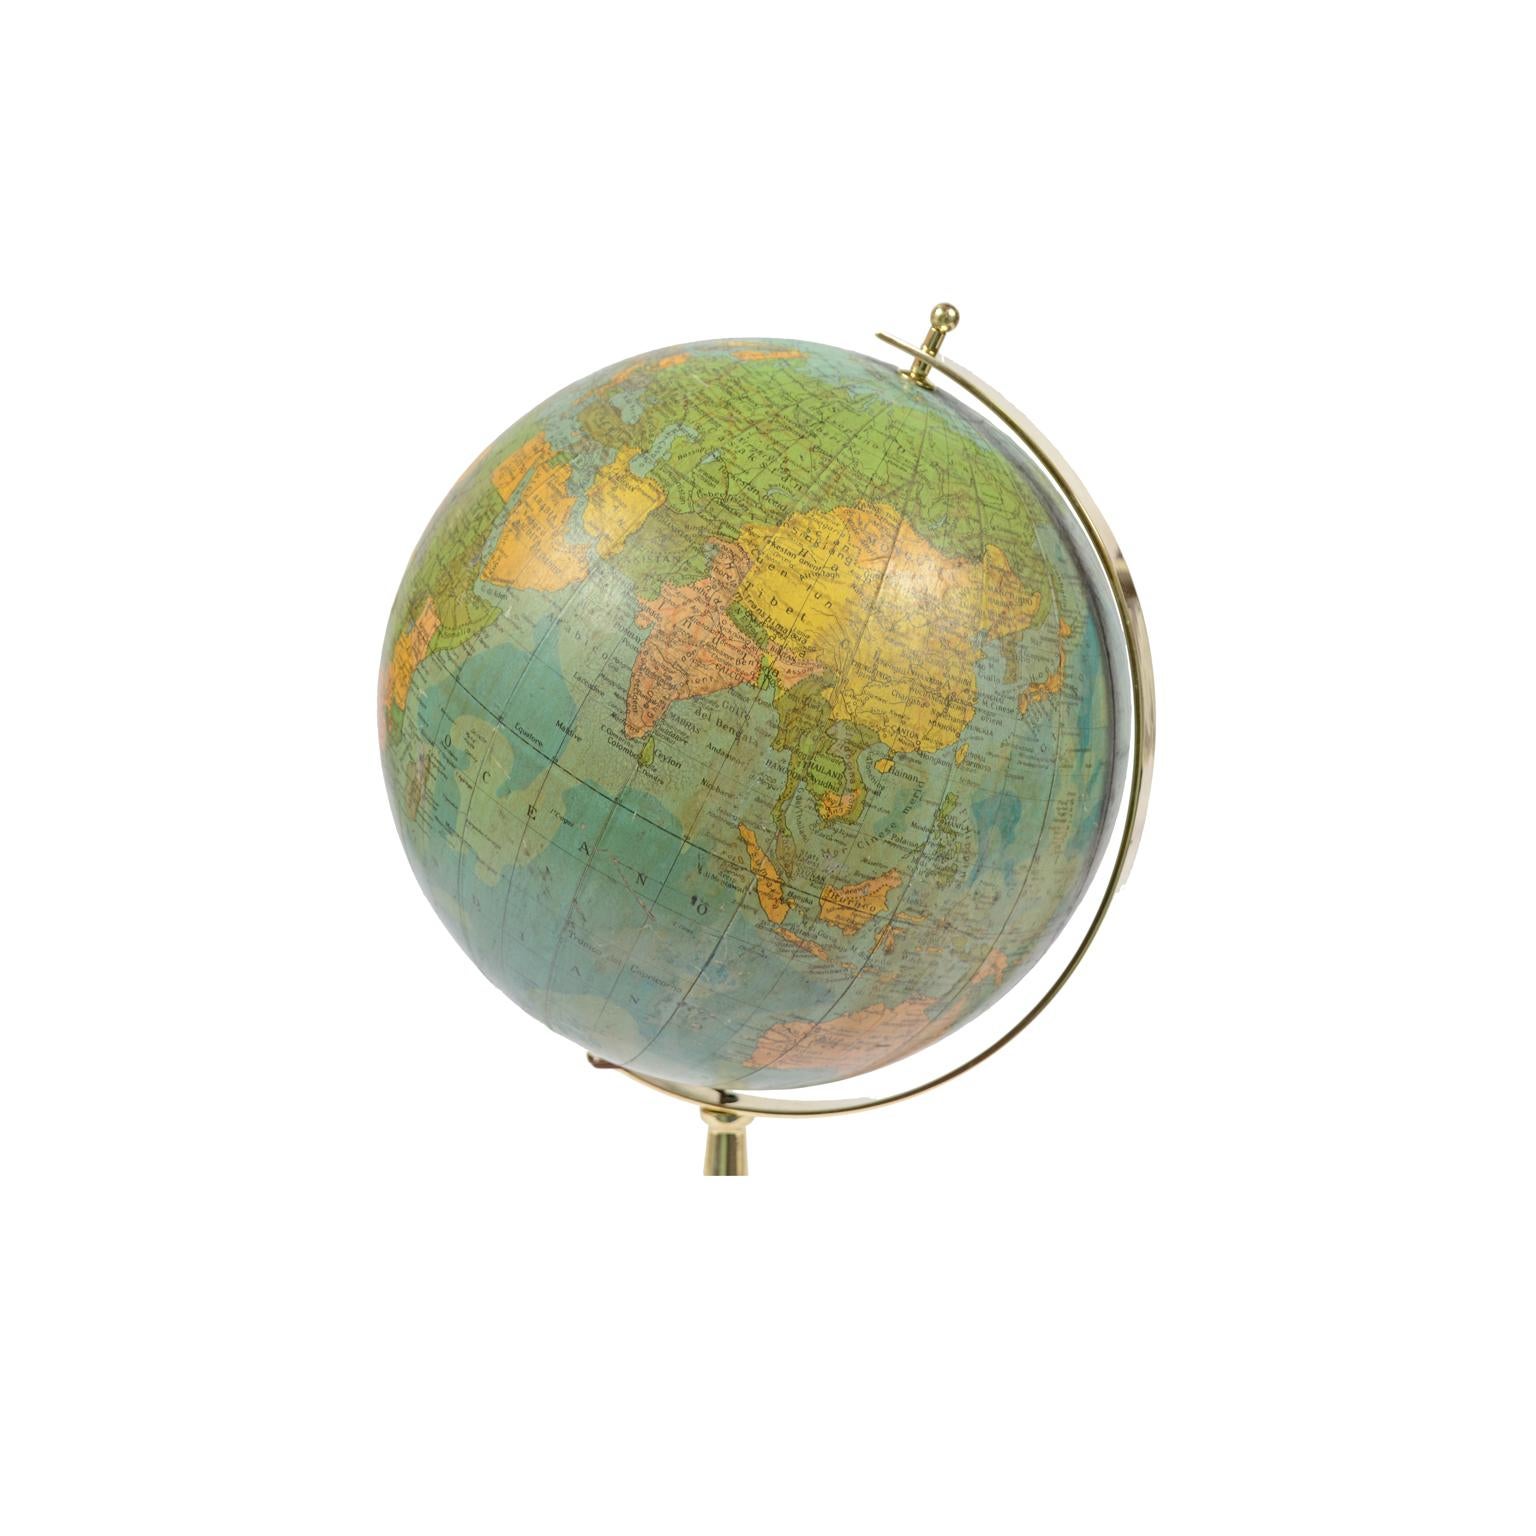 Italian Terrestrial Globe Illuminated from the Inside, 1950s